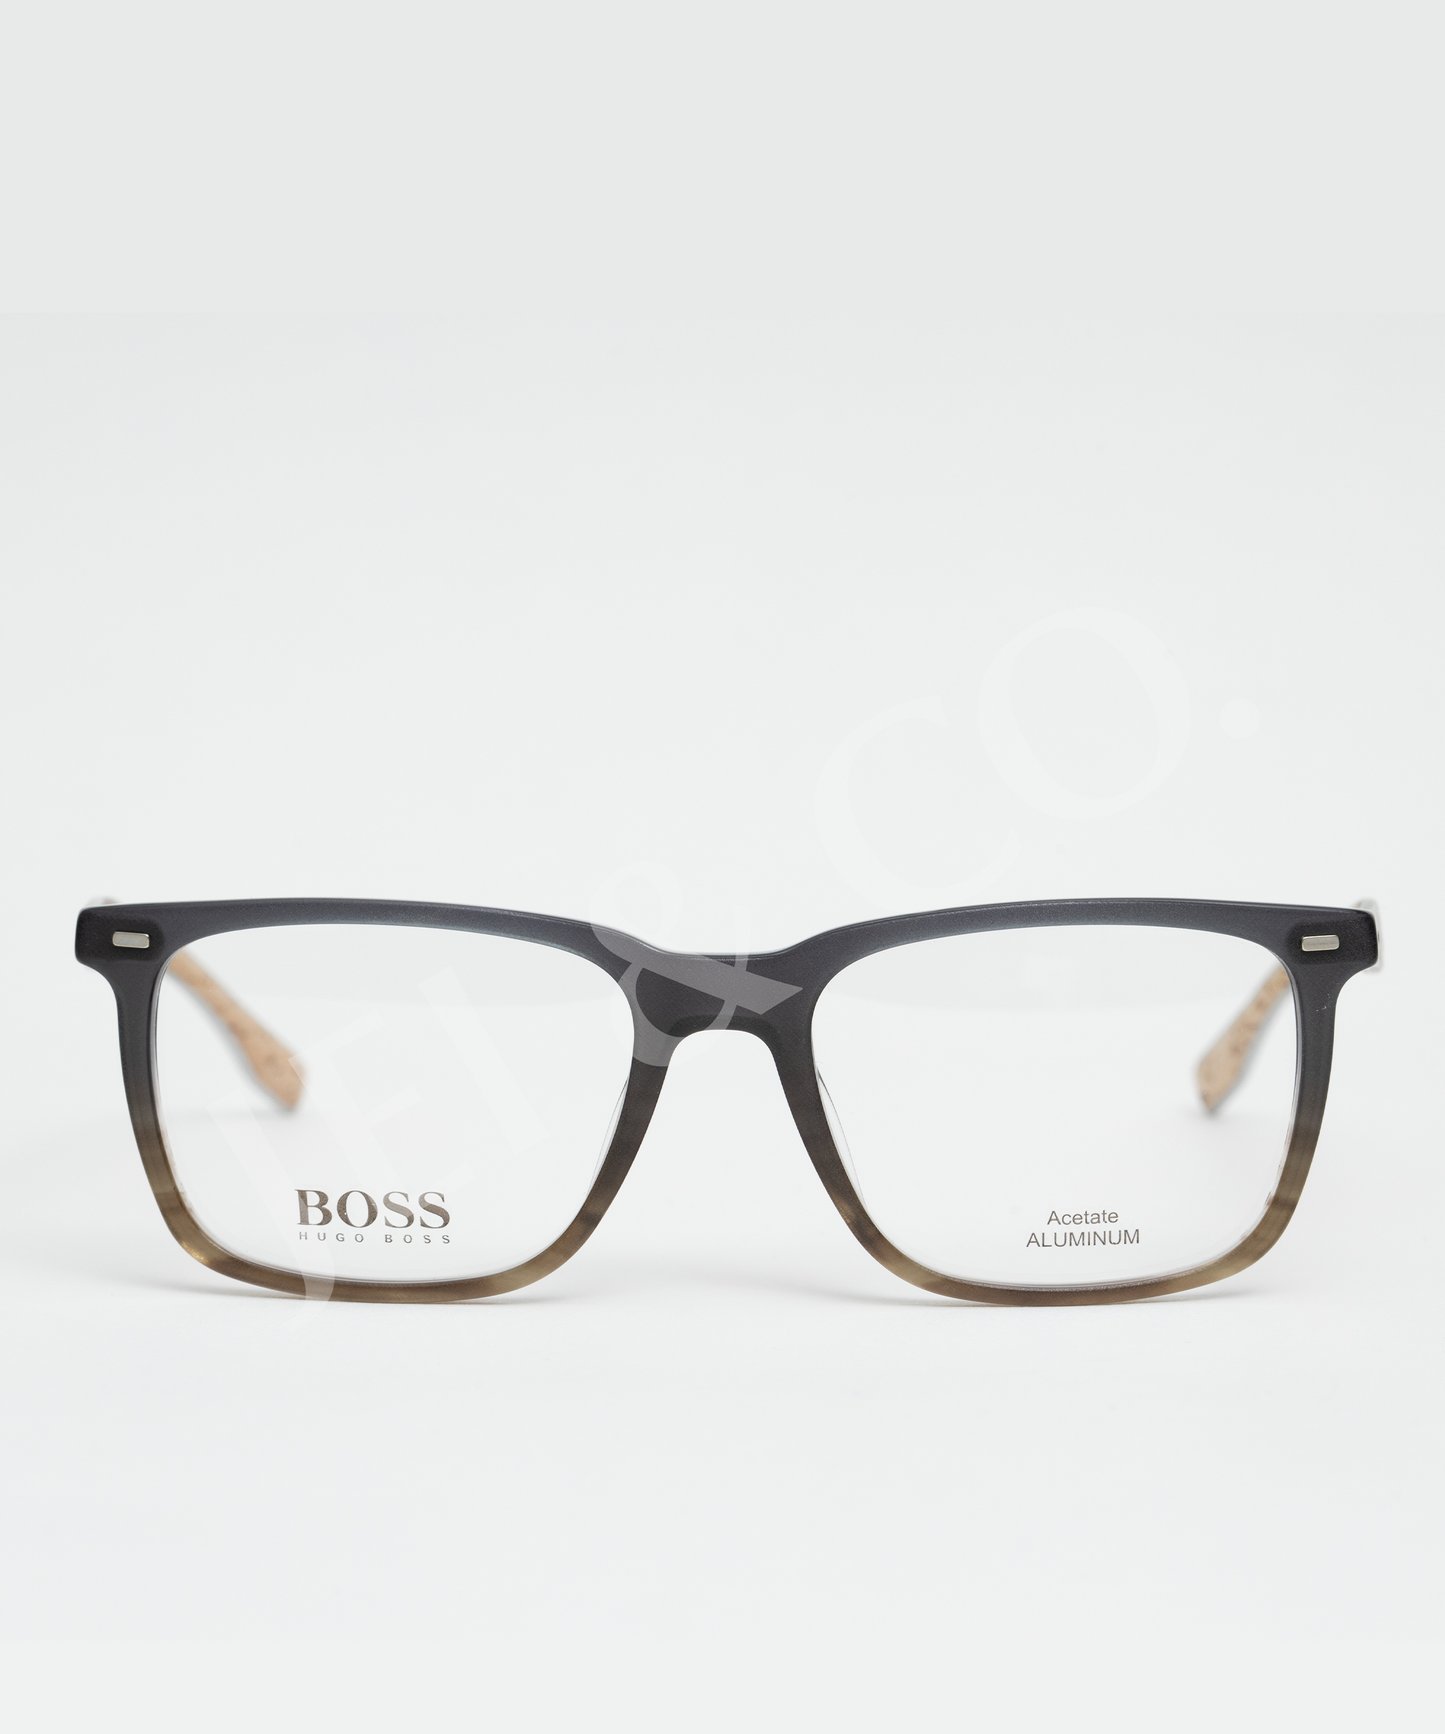 BOSS 0884 Comfy Sports Style Rectangular Eyeglasses Brown/Grey